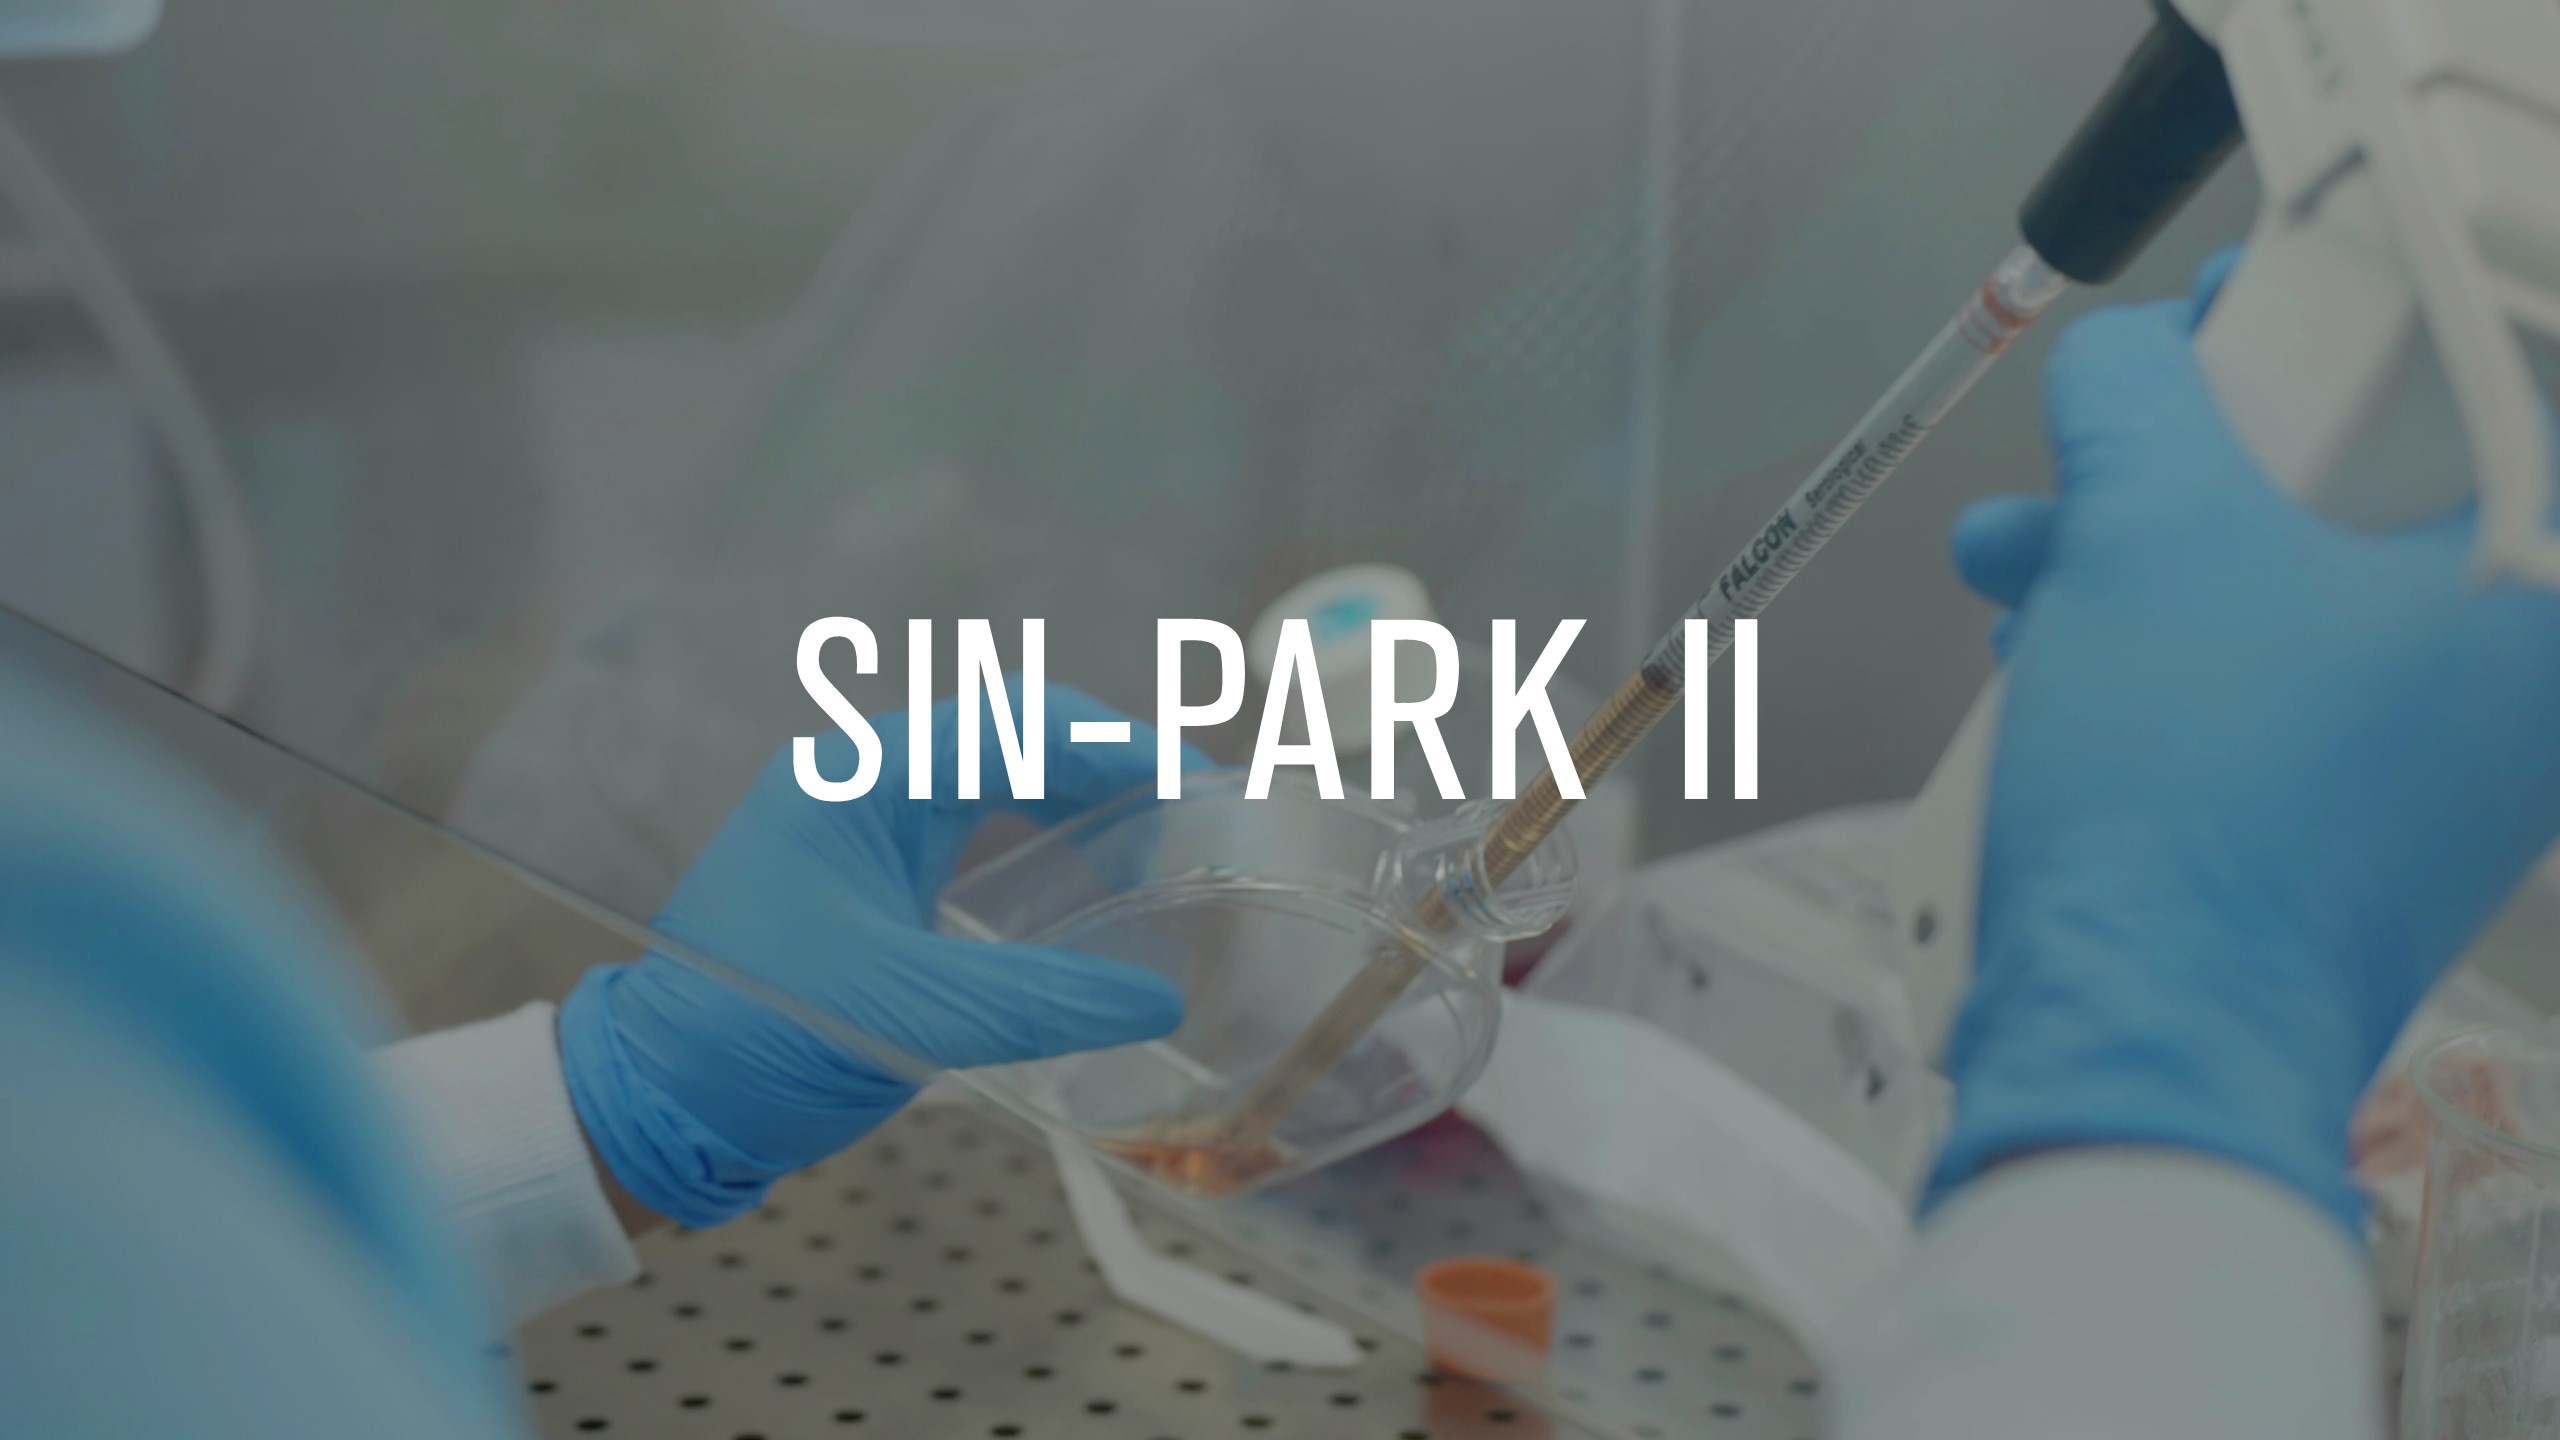 SinPark II proyecto colaborativo para prevenir la muerte de neuronas